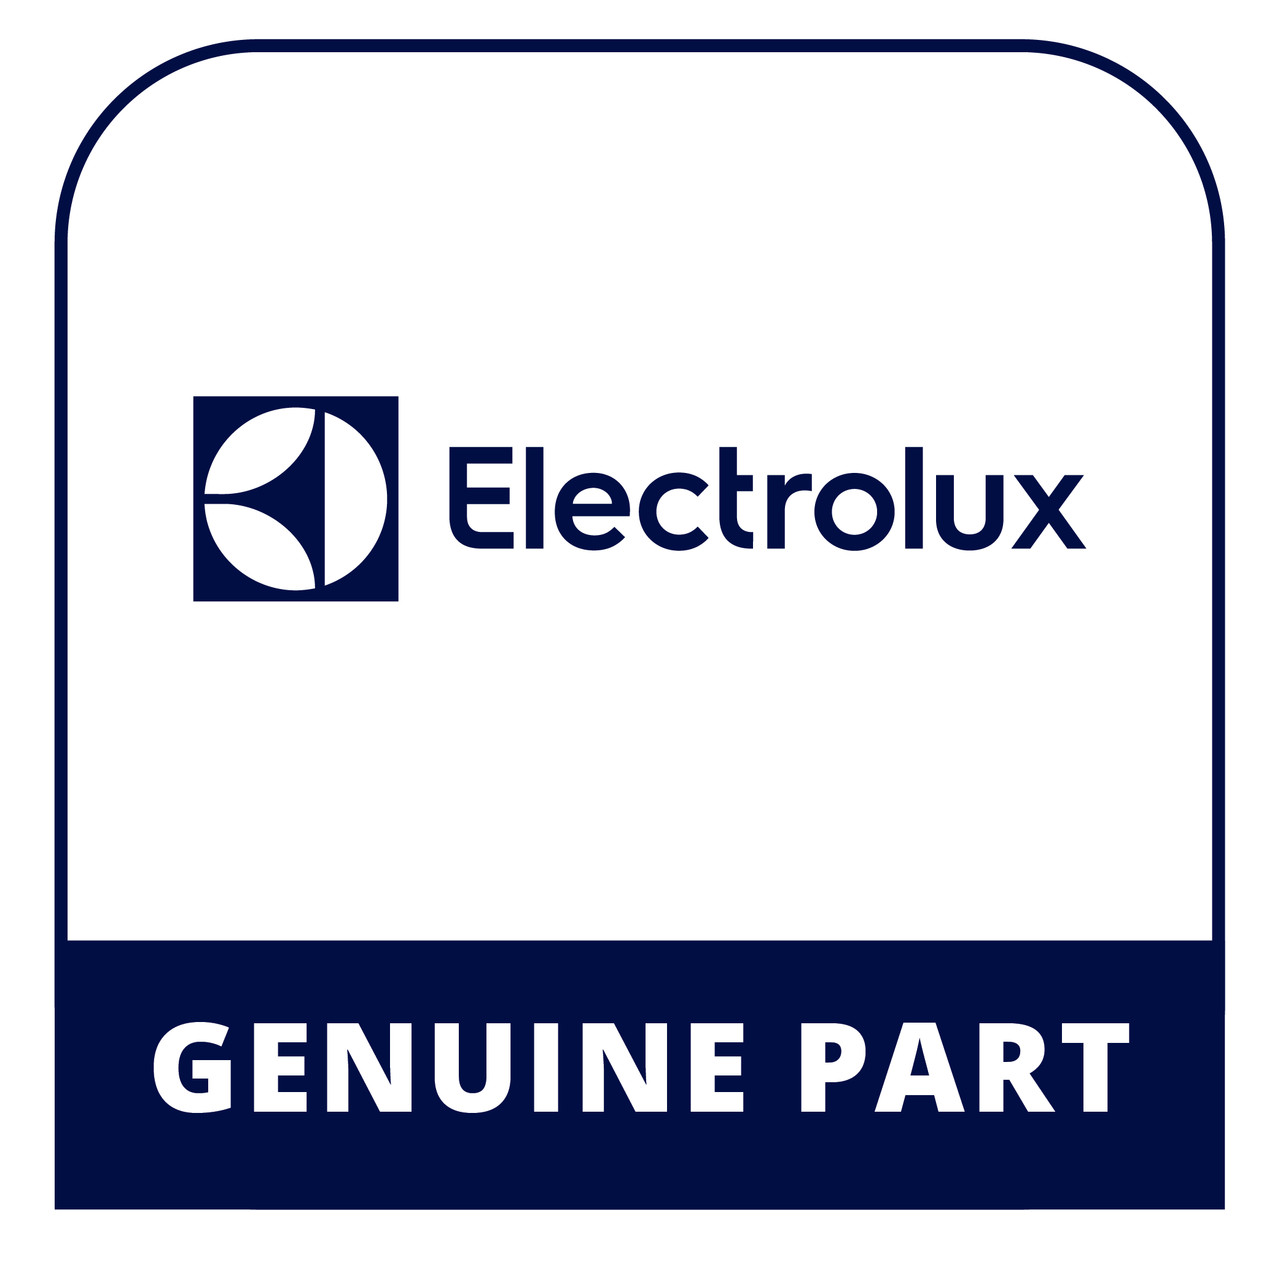 Frigidaire - Electrolux 5304477143 Panel - Genuine Electrolux Part